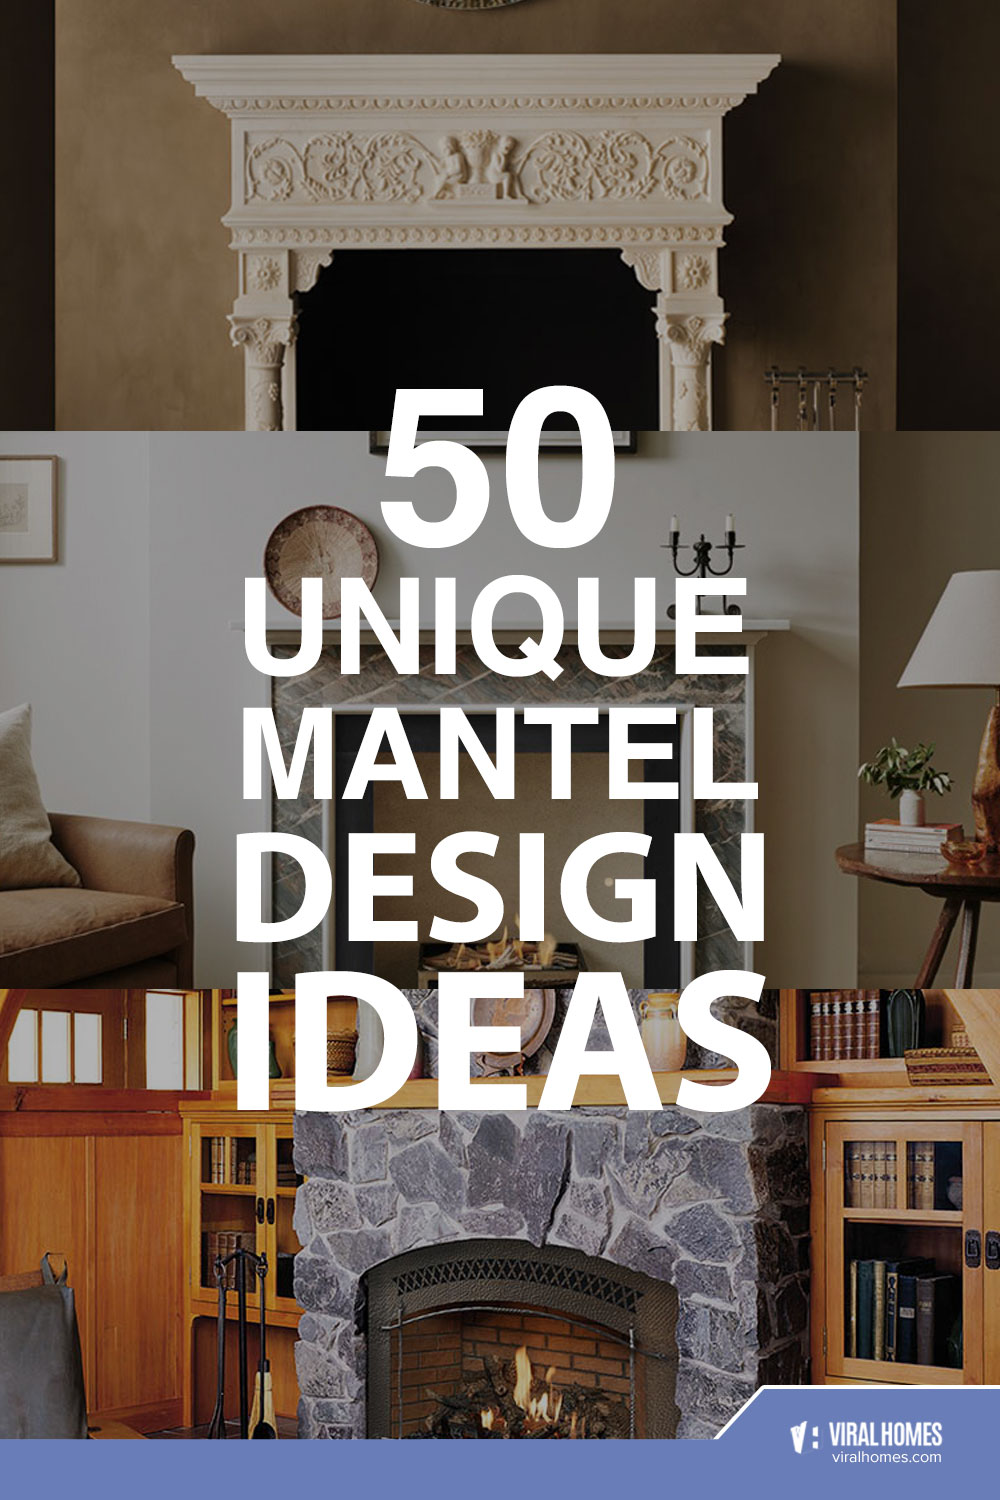 Unique Mantel Designs to Turn Heads